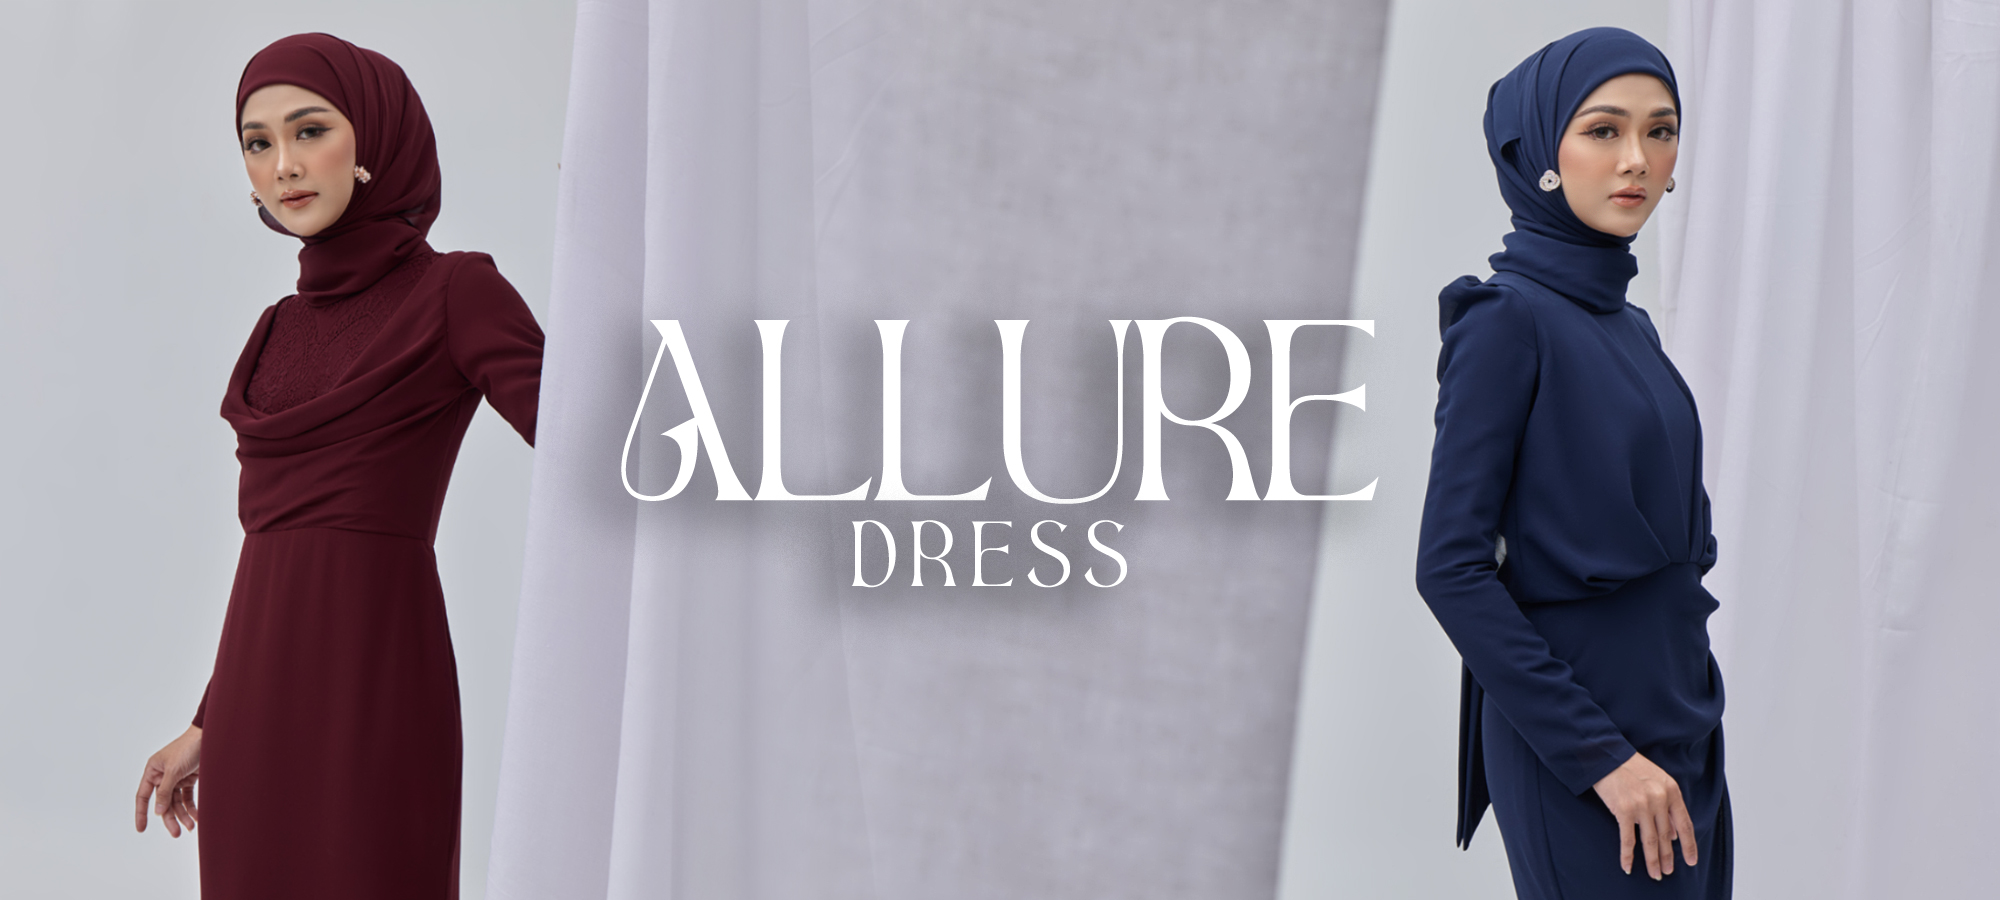 Allure Dress